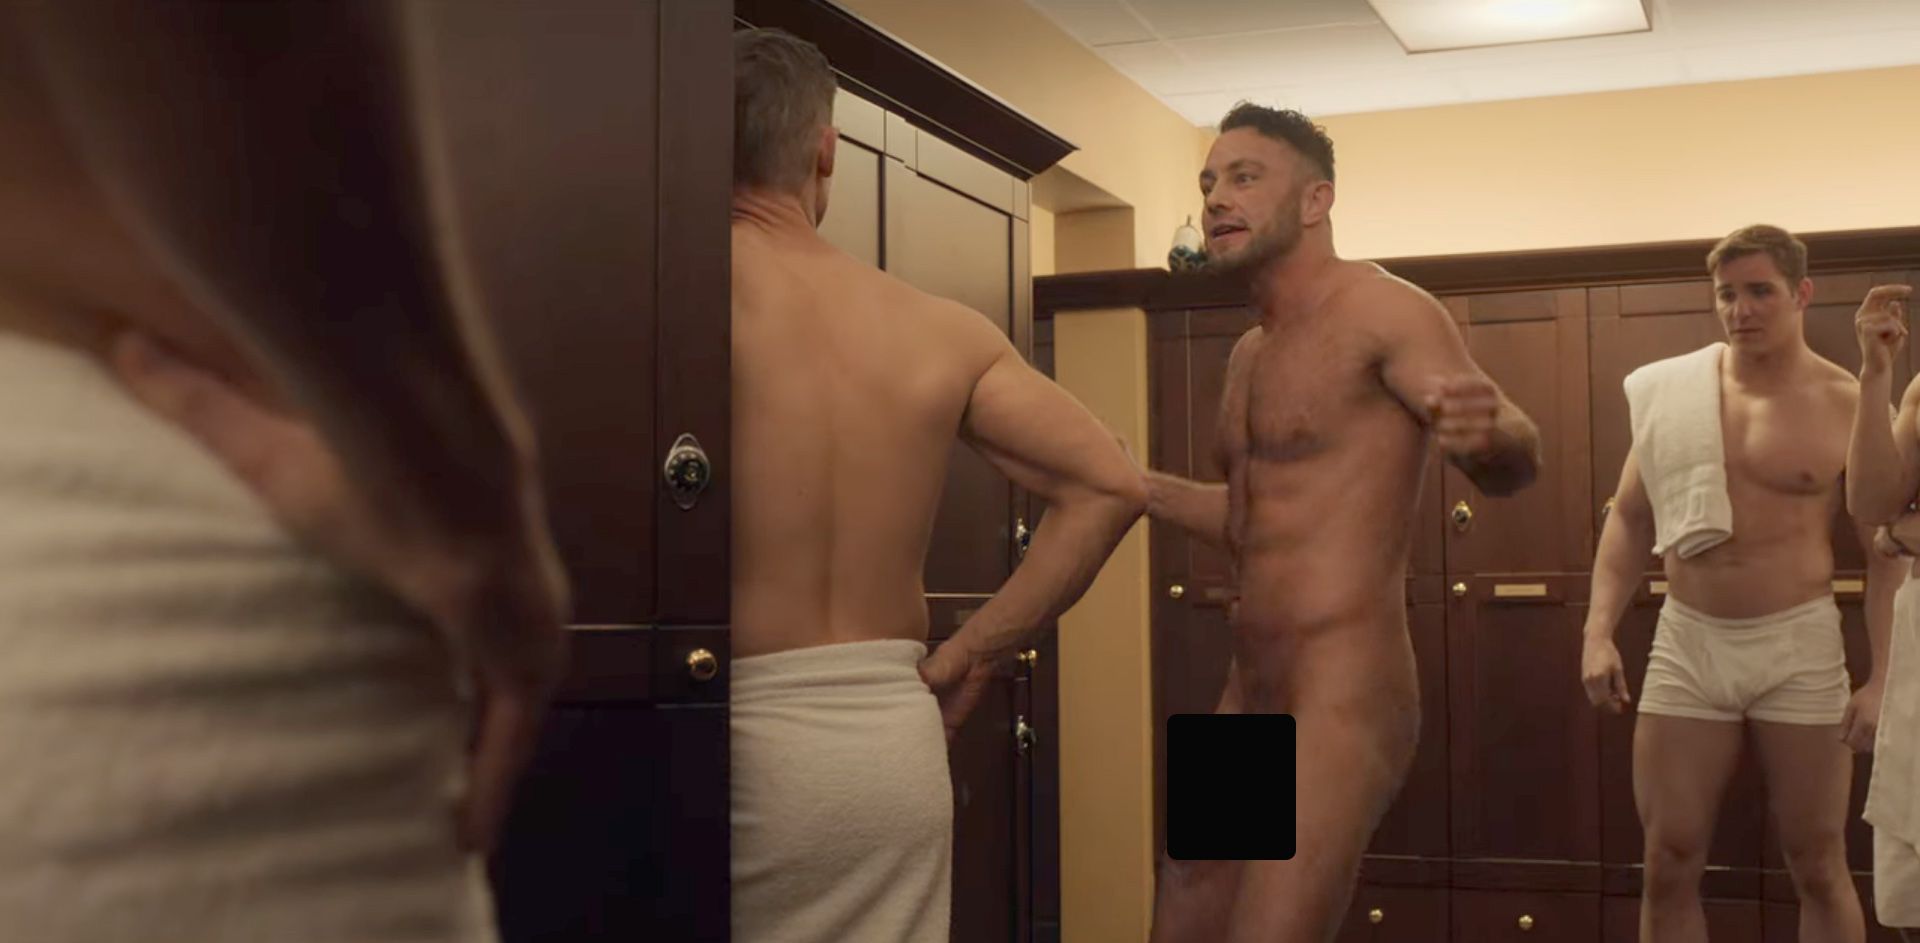 Sex/Life tops viral penis shower scene with something wilder